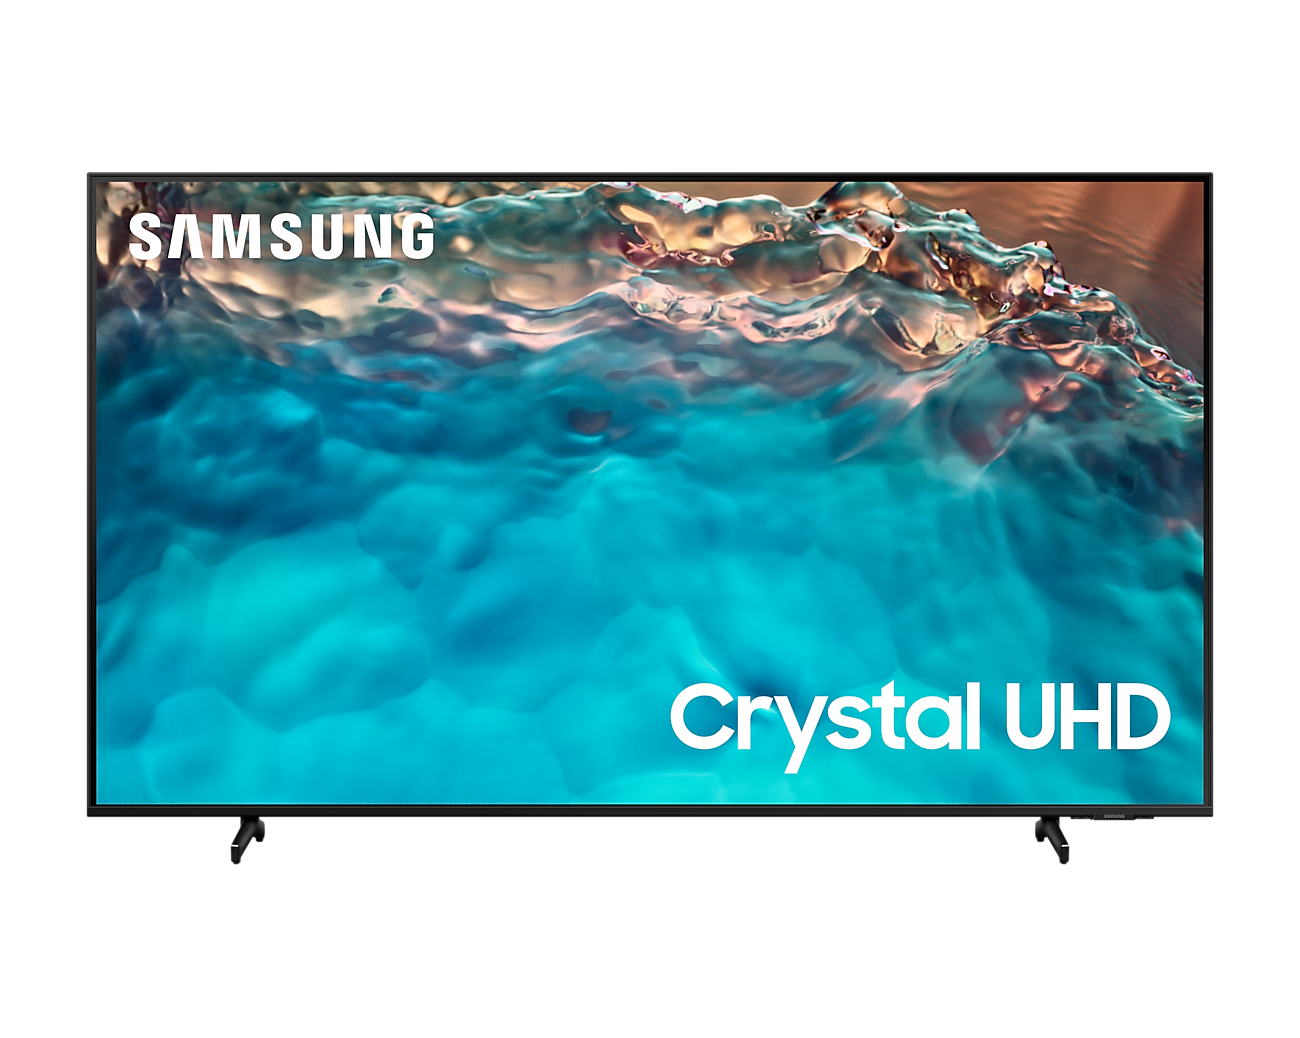 2m 16cm (85") BU8000 Crystal 4K UHD Smart TV